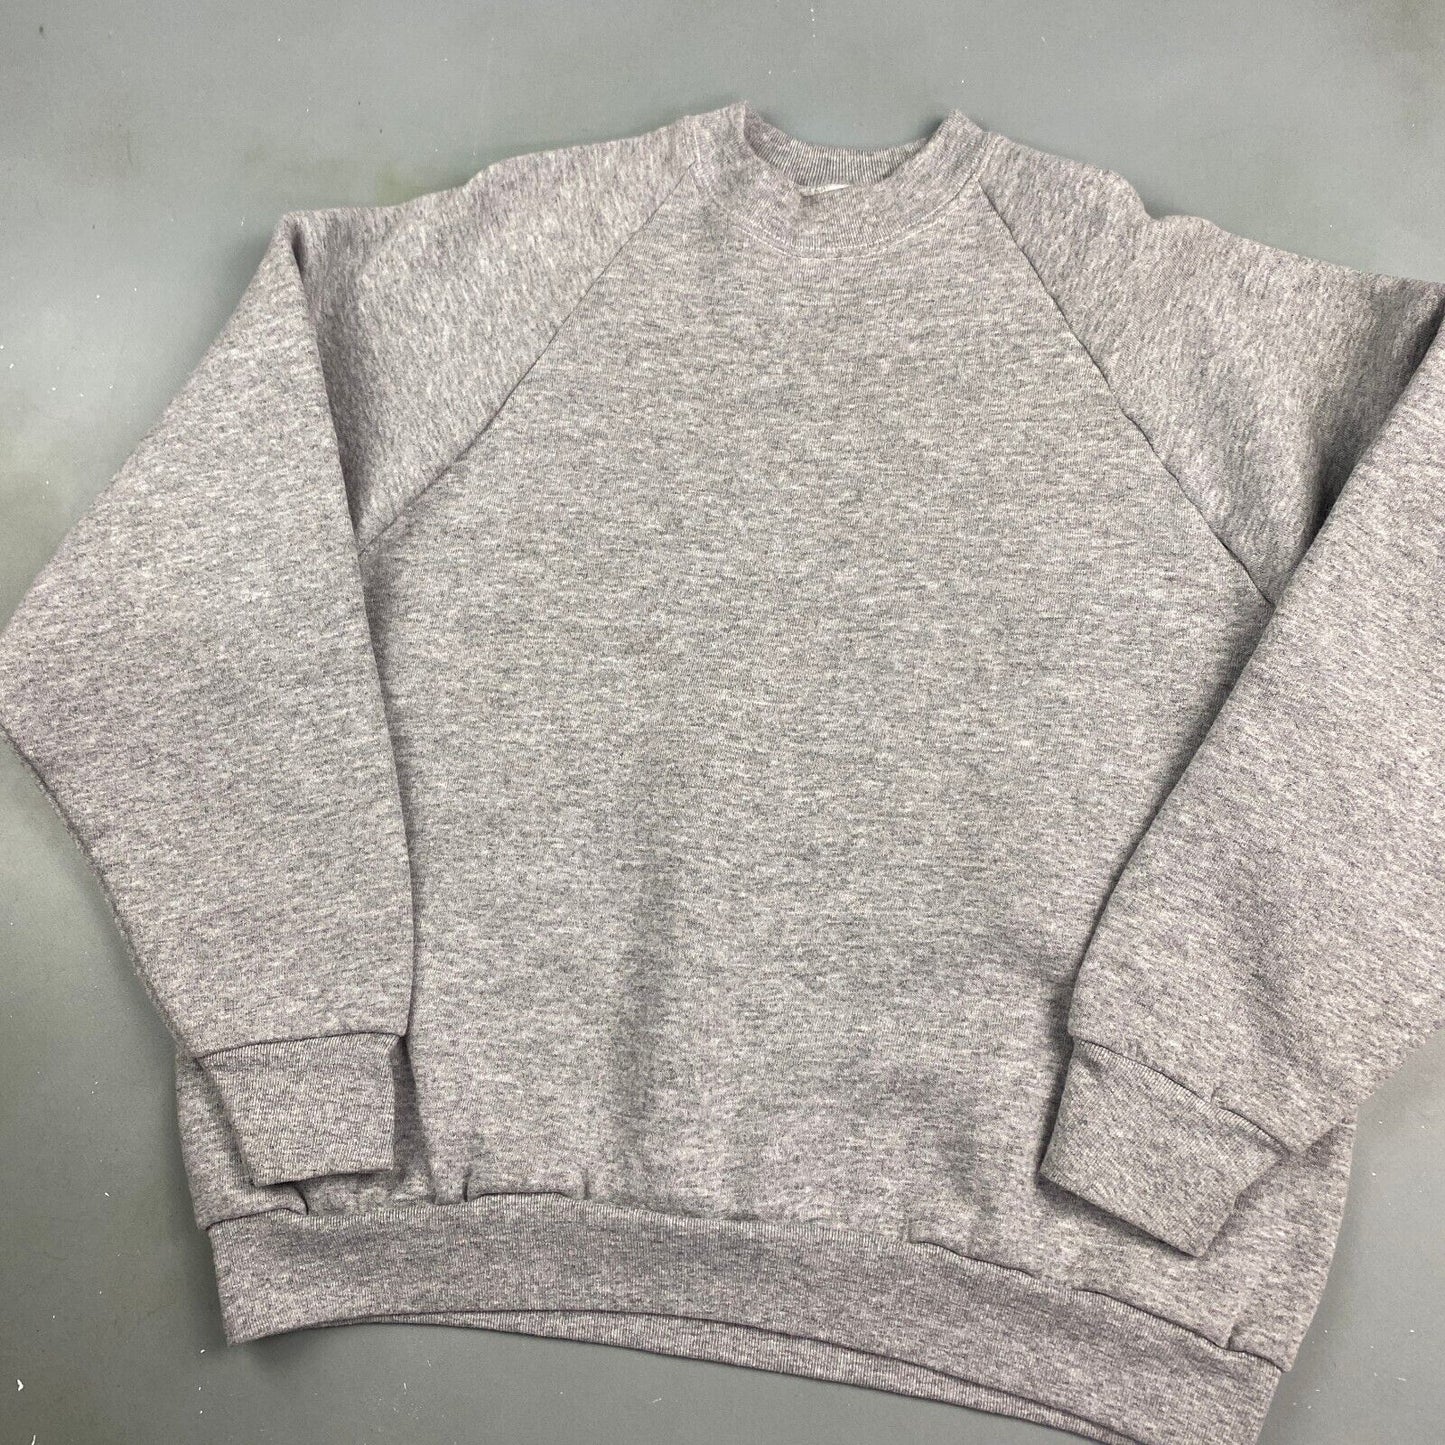 VINTAGE 90s Blank Grey Crewneck Sweater sz Medium Adult